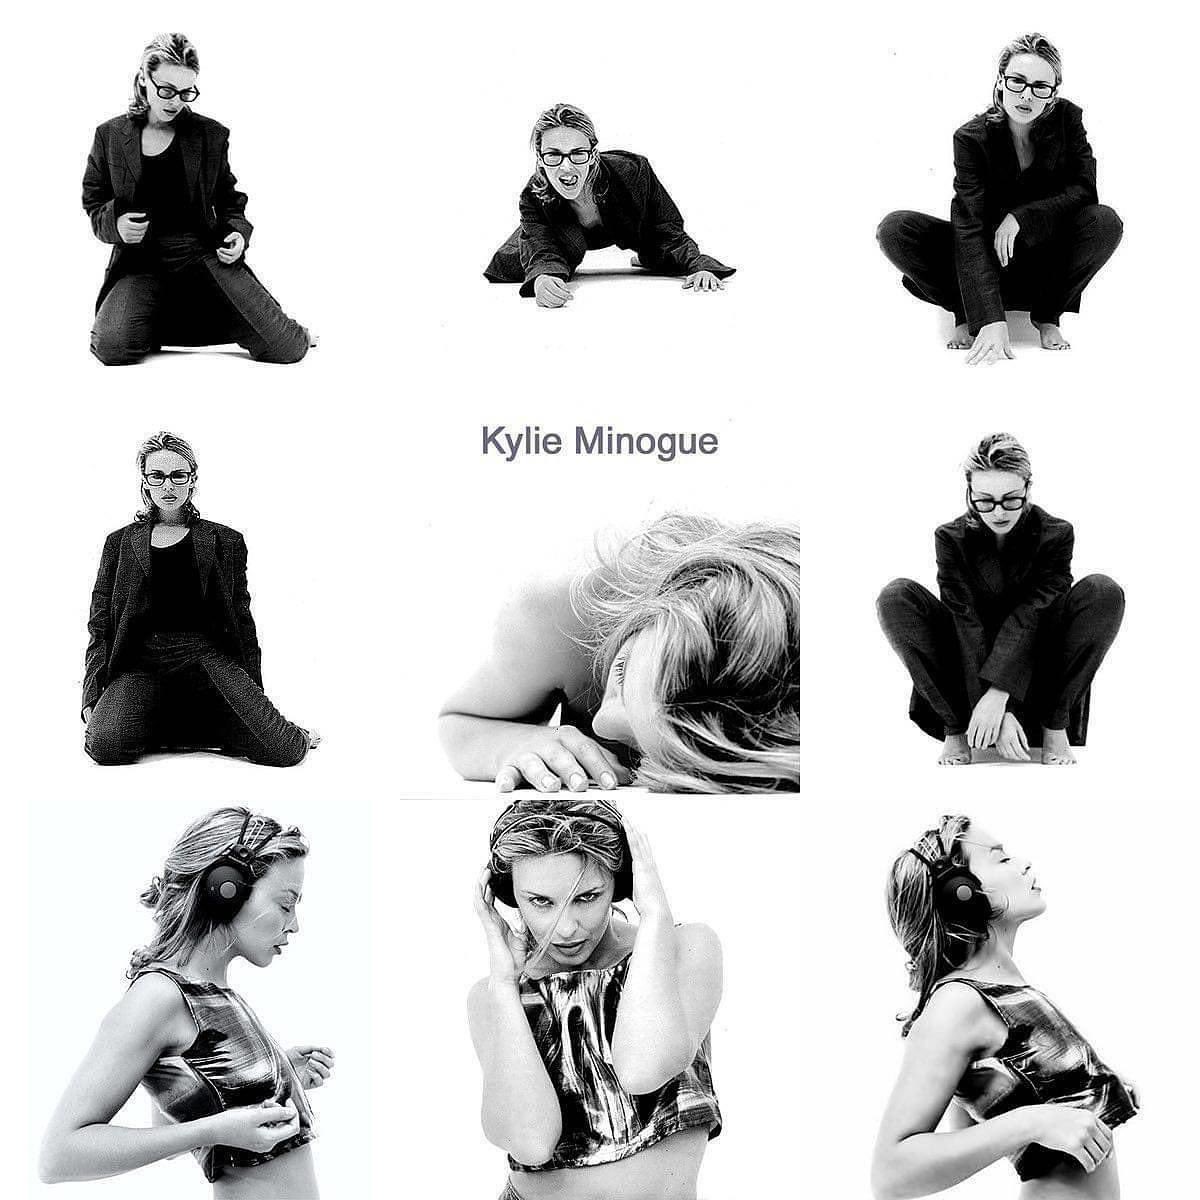 Happy anniversary to Kylie Minogue’s eponymous album. Released this week in 1994. #kylieminogue #kylie #confideinme #putyourselfinmyplace #whereisthefeeling #deconstruction #brothersinrhythm #daveseaman #steveanderson